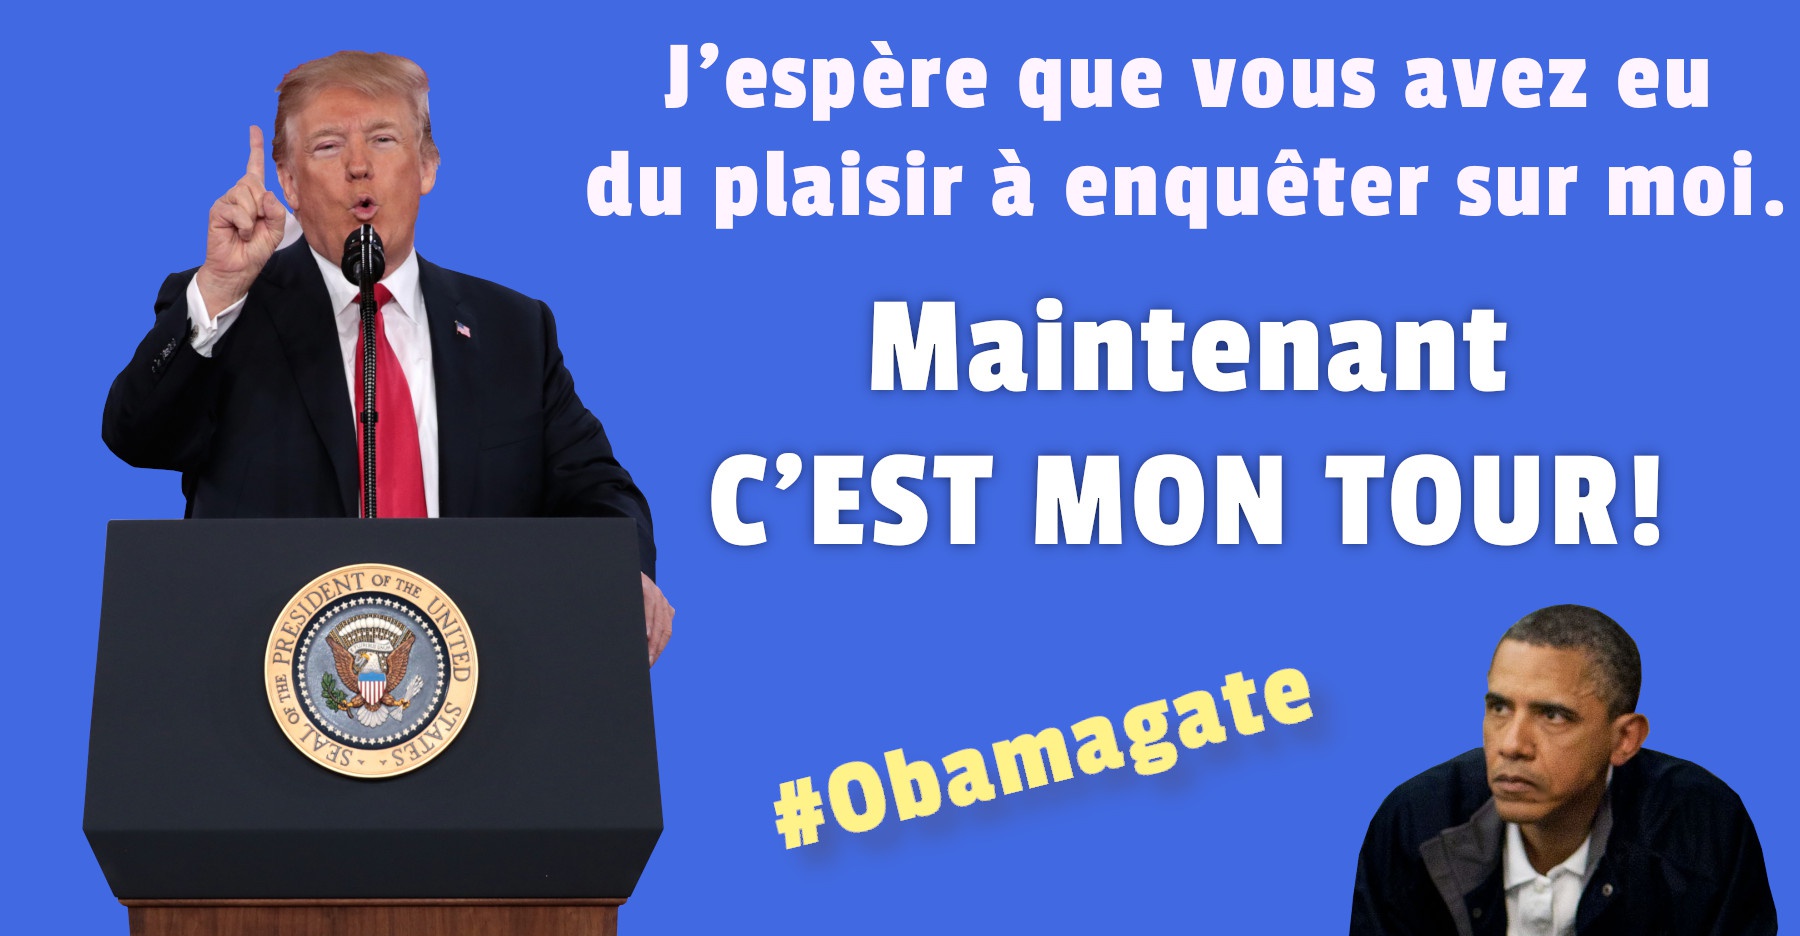 #Obamagate